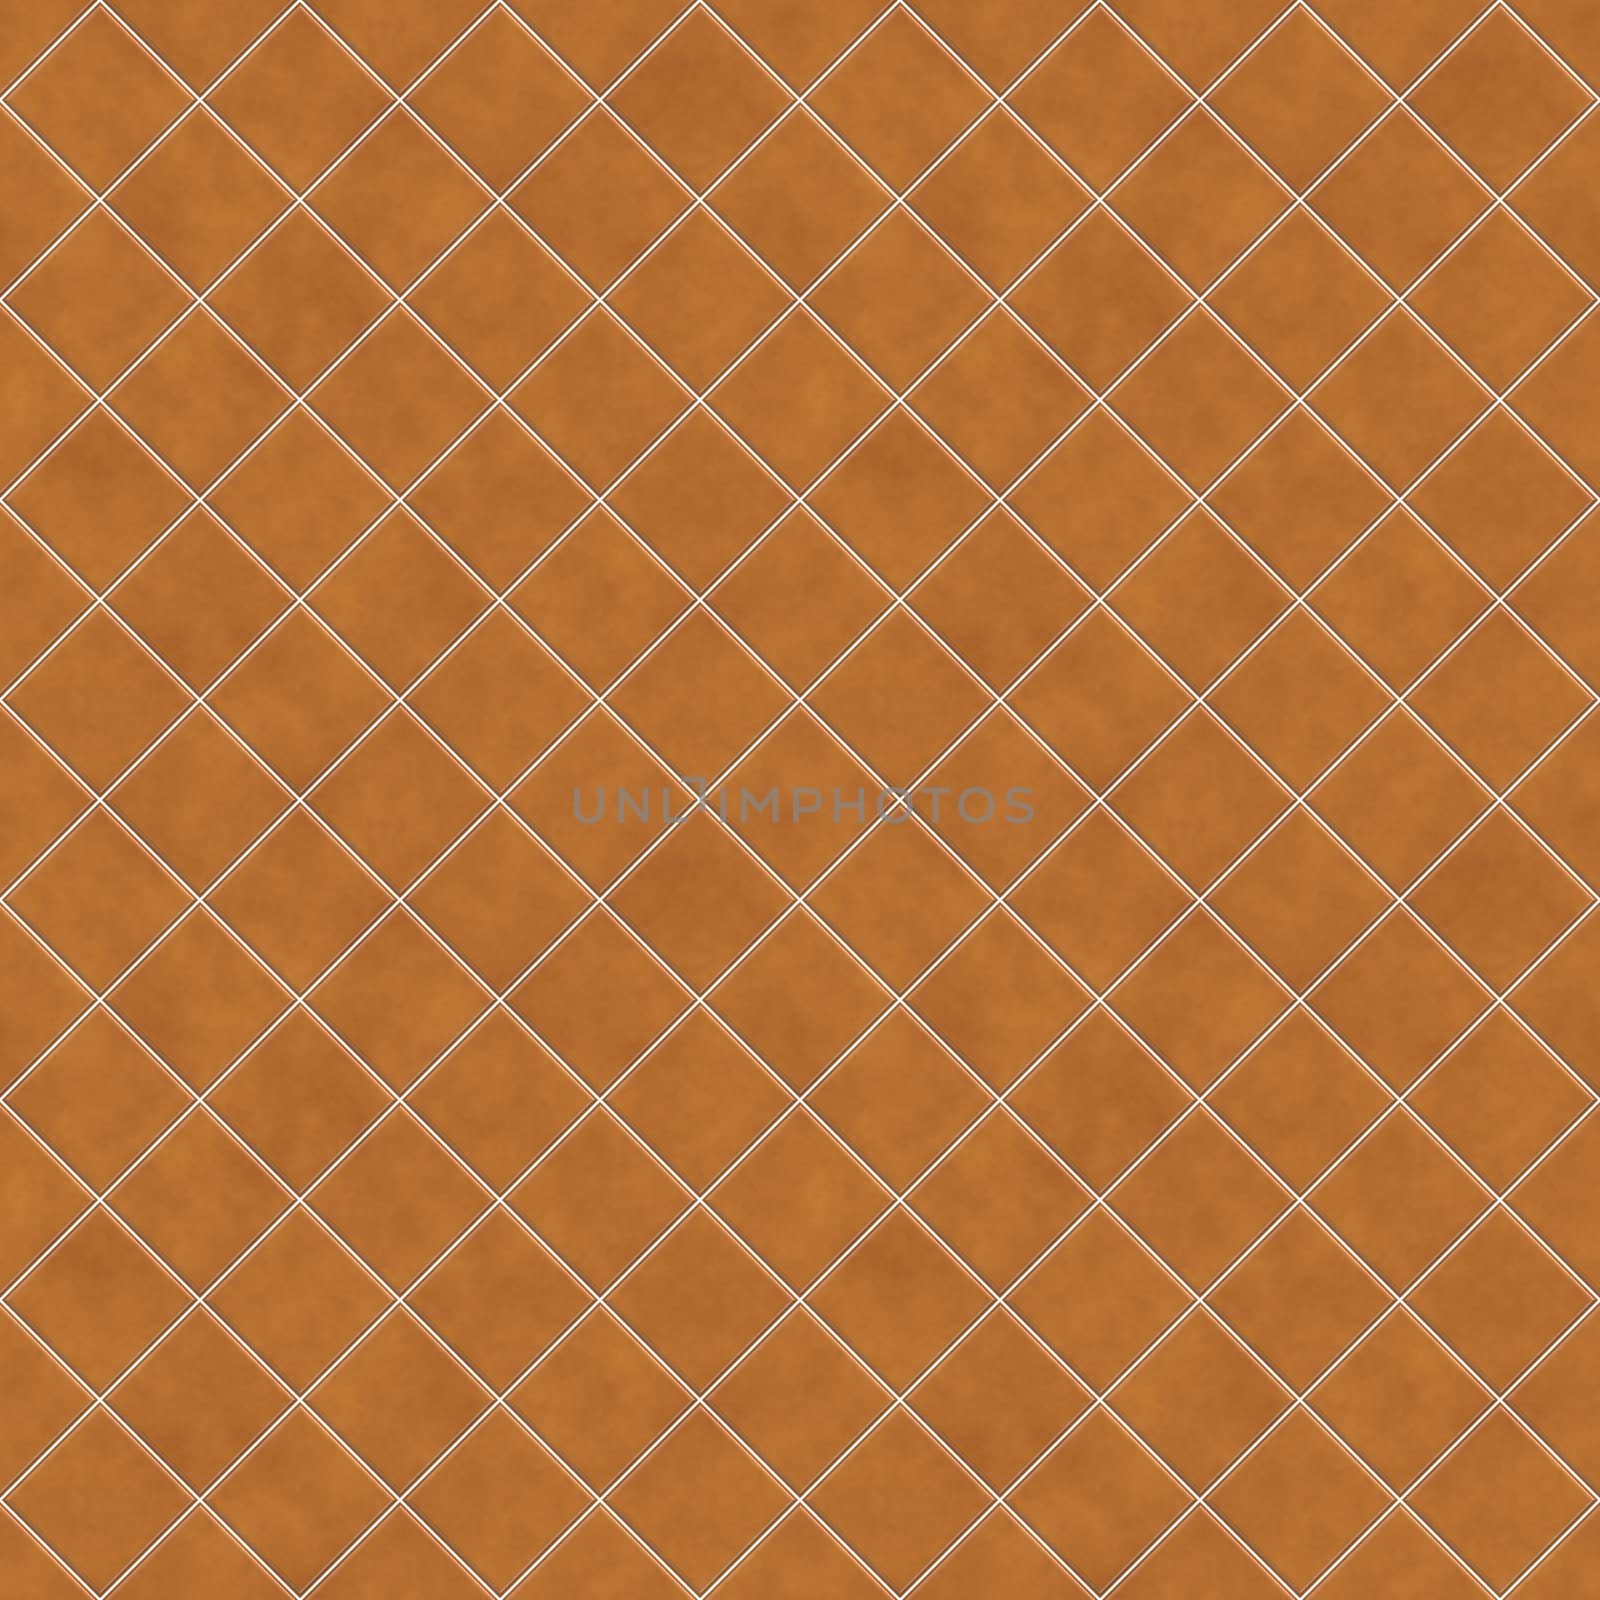 Realistic Illustration of Tiles Seamless Pattern